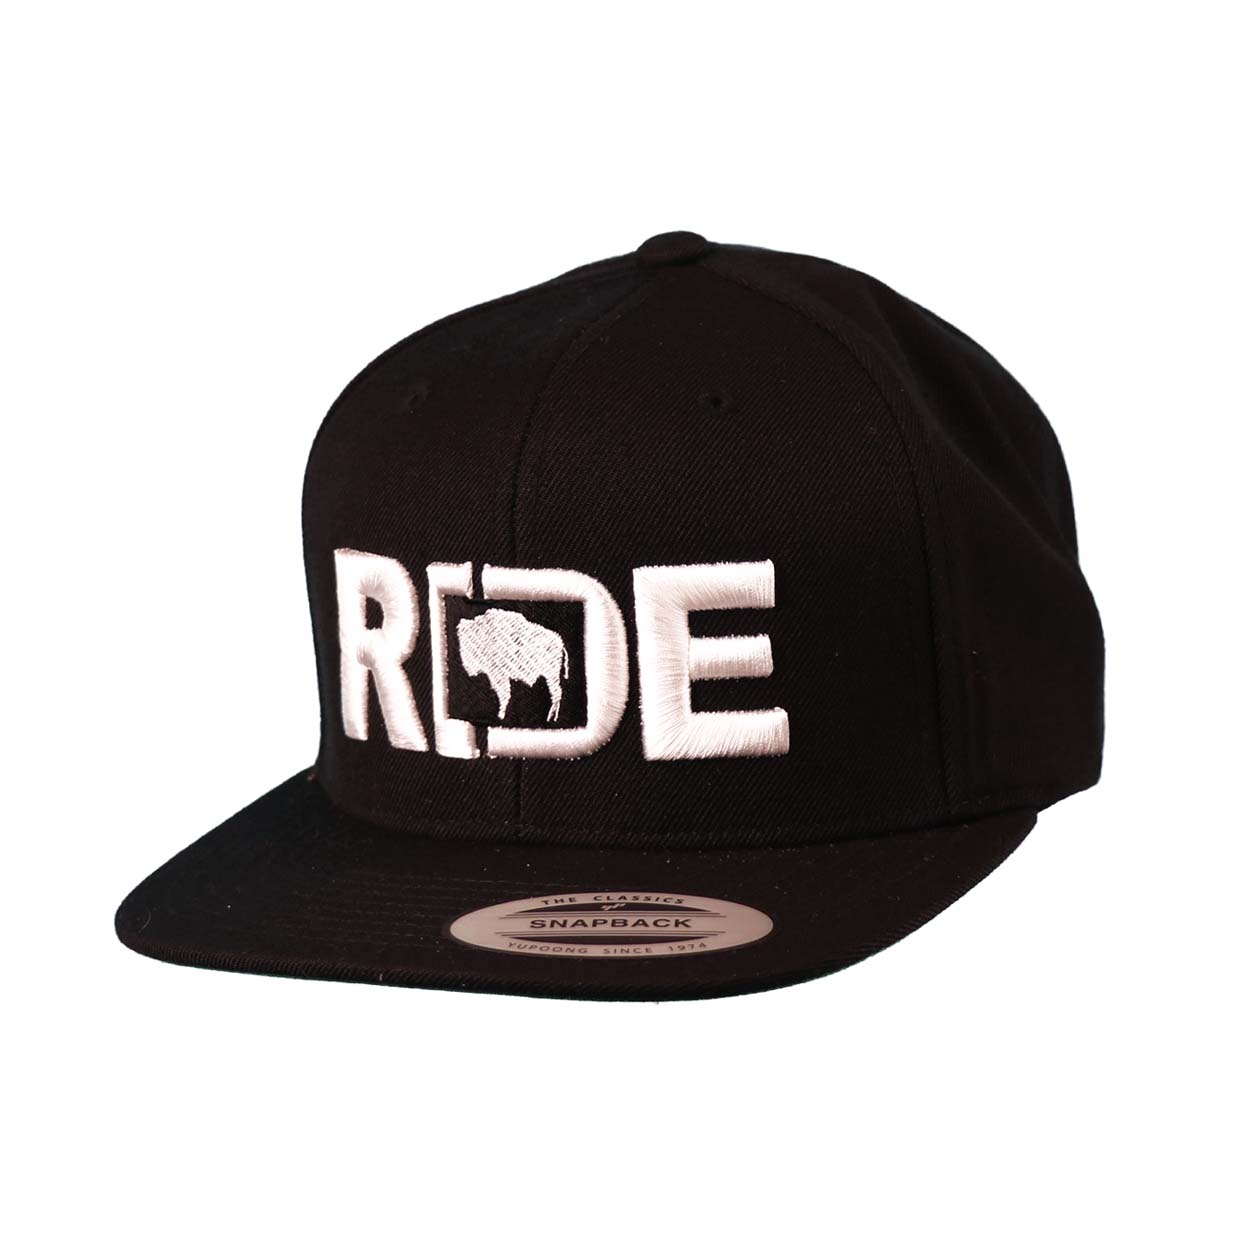 Ride Wyoming Classic Embroidered  Snapback Flat Brim Hat Black